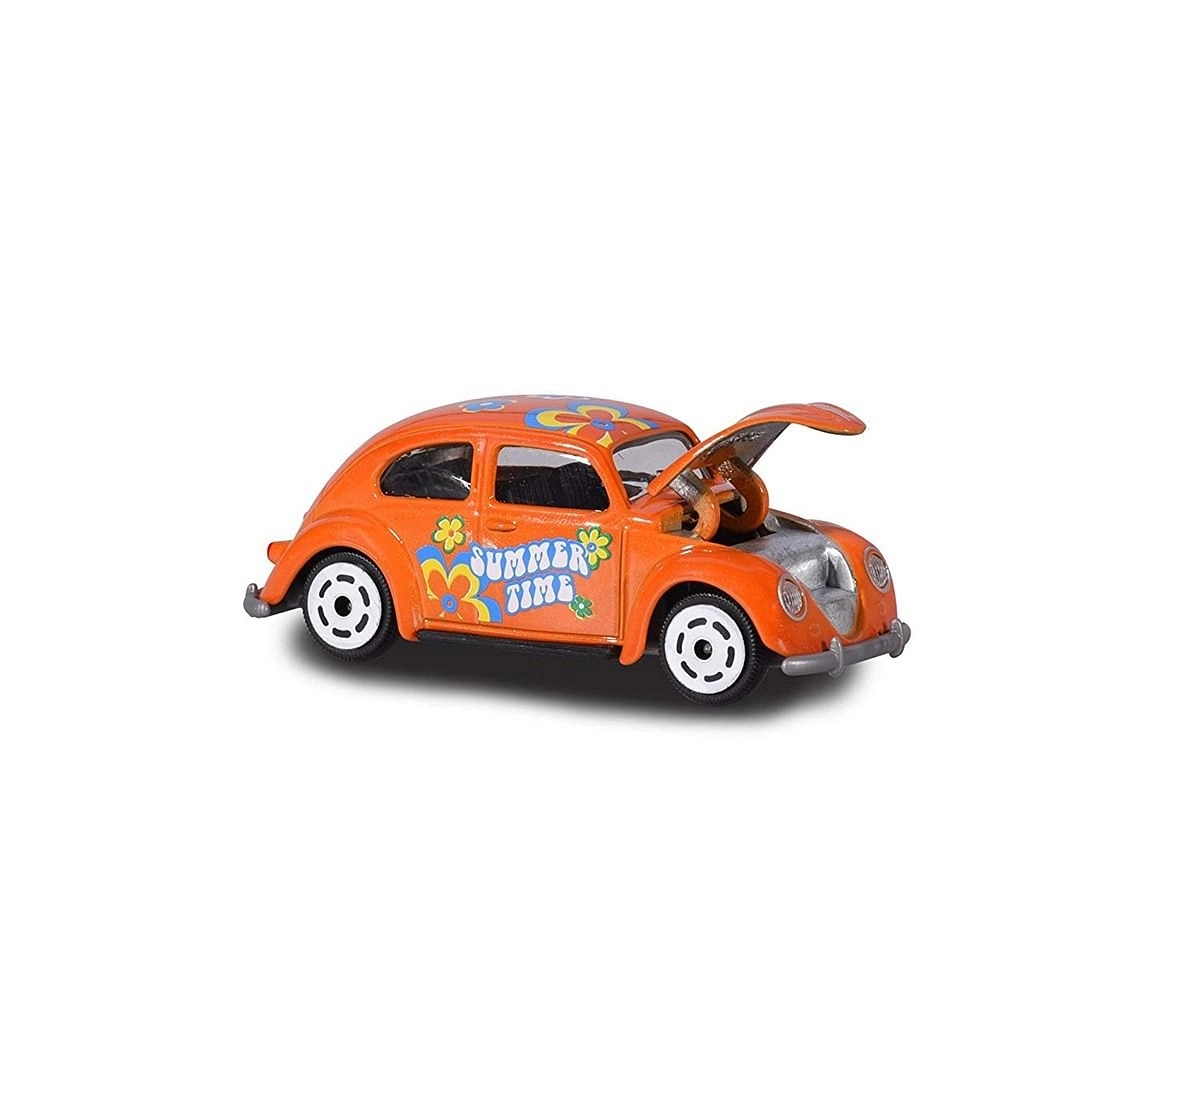 Majorette Volkswagen The Original 5 Pieces Git Pack Car Set For Kids Vehicles for Kids age 3Y+ 